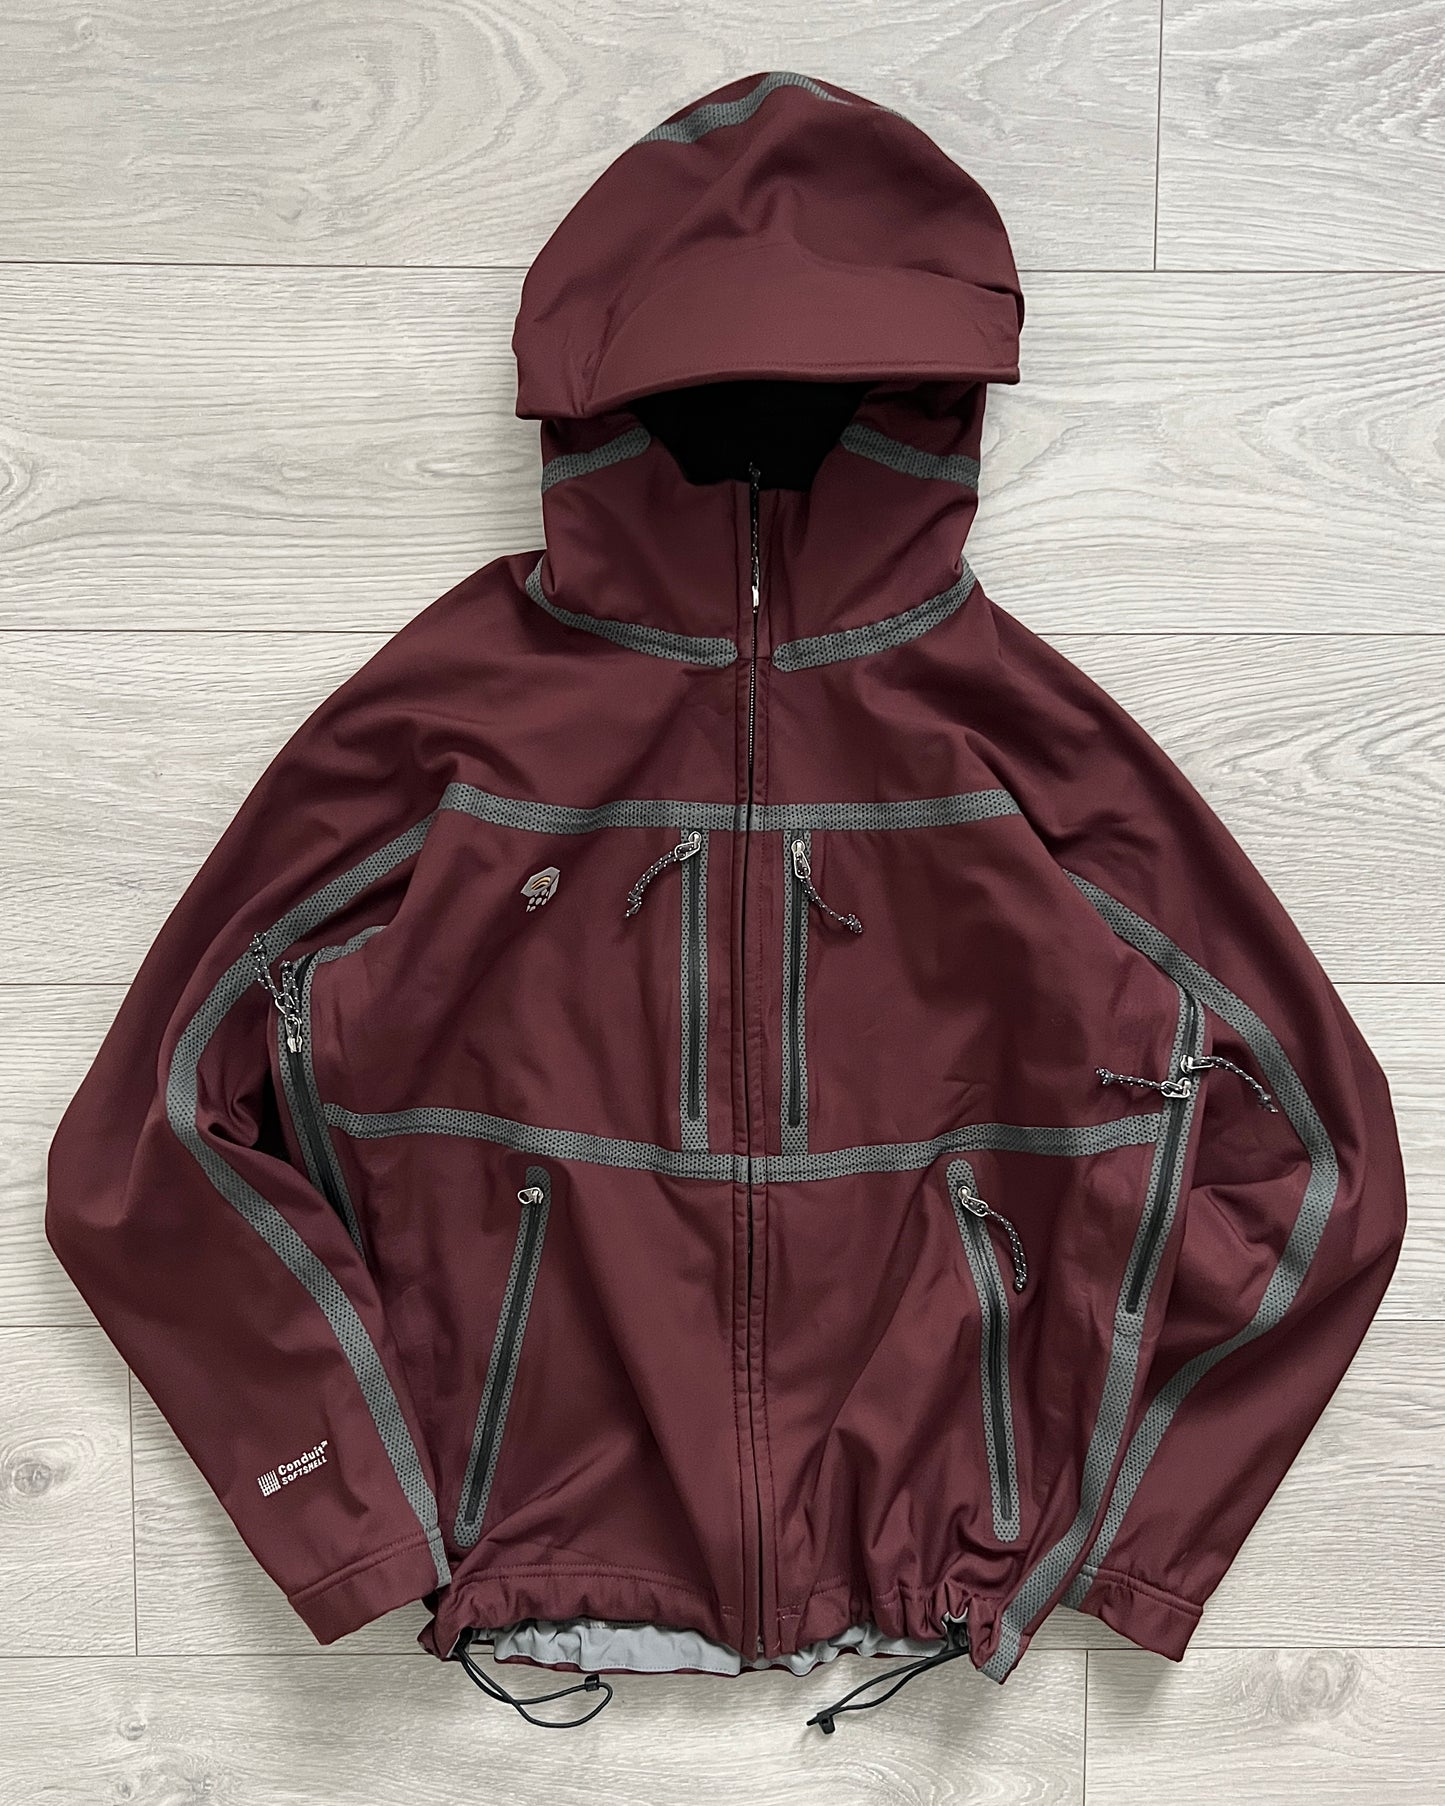 Mountain Hardwear Exposed Taped Seam Technical Conduit Jacket Burgundy - Size S